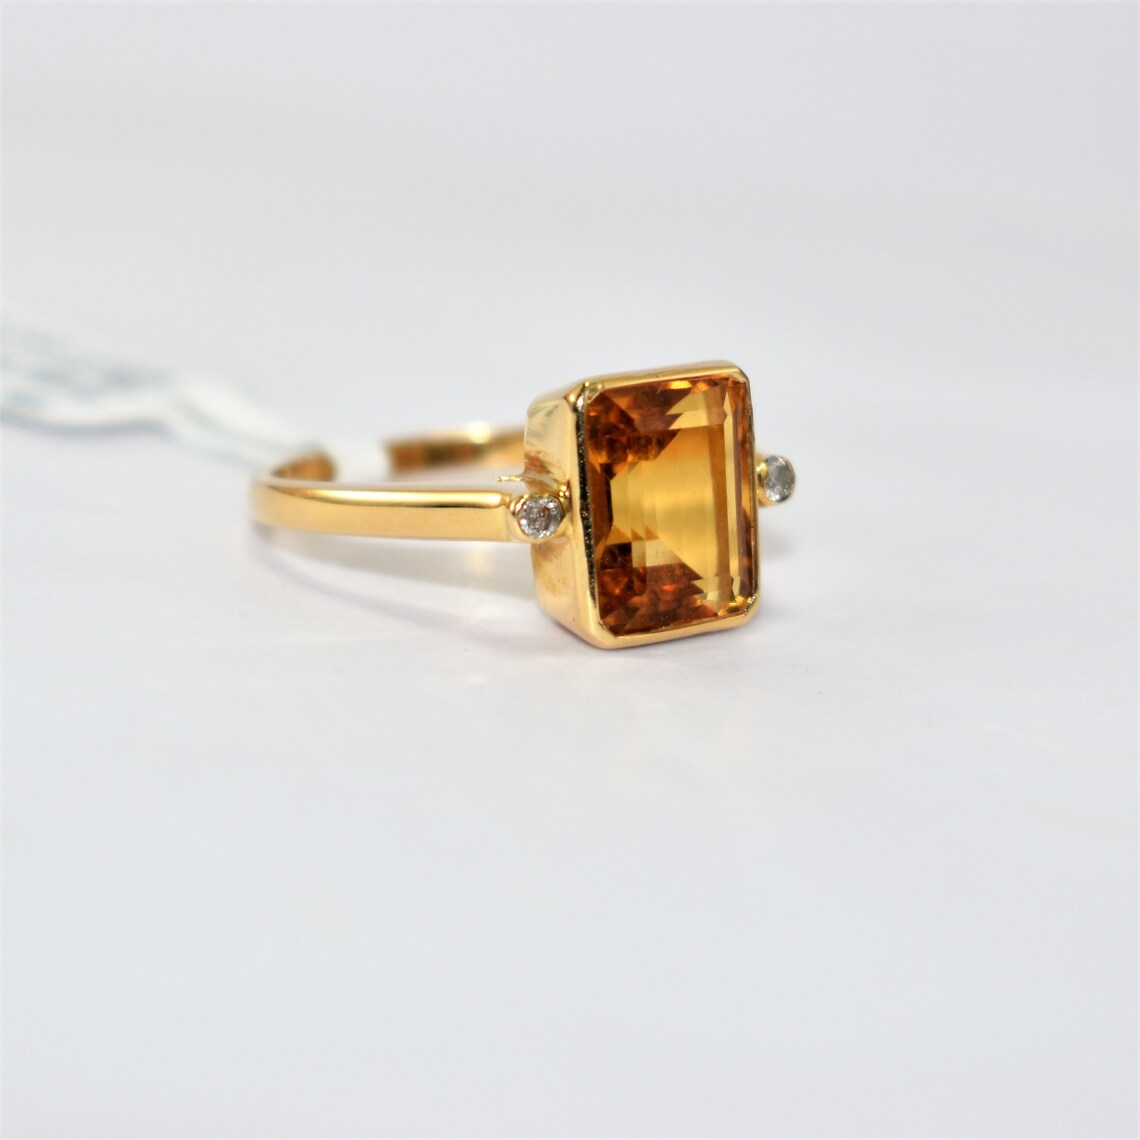 Gorgeous Yellow Topaz Stone Handmade Rectangular Ring | Etsy